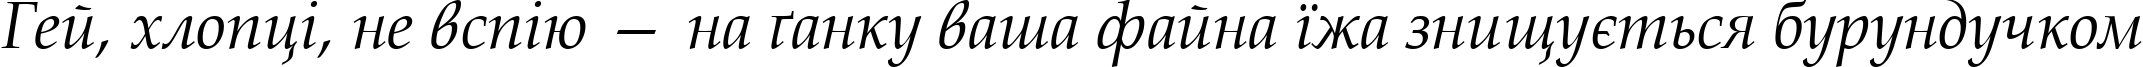 Пример написания шрифтом Book Antiqua Italic текста на украинском